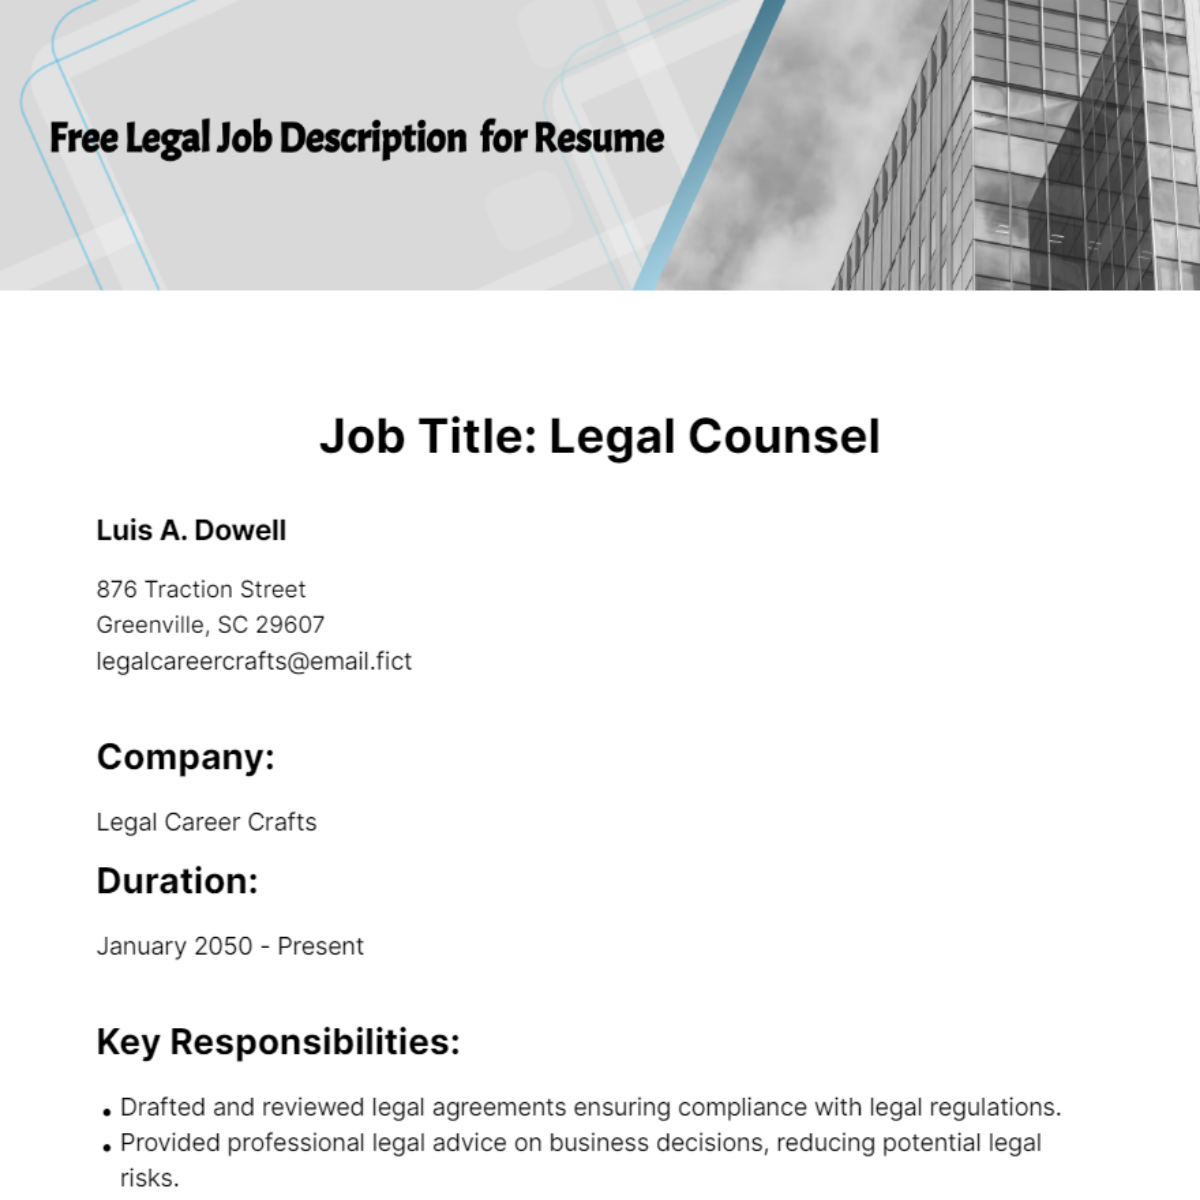 Free Legal Job Description for Resume Template